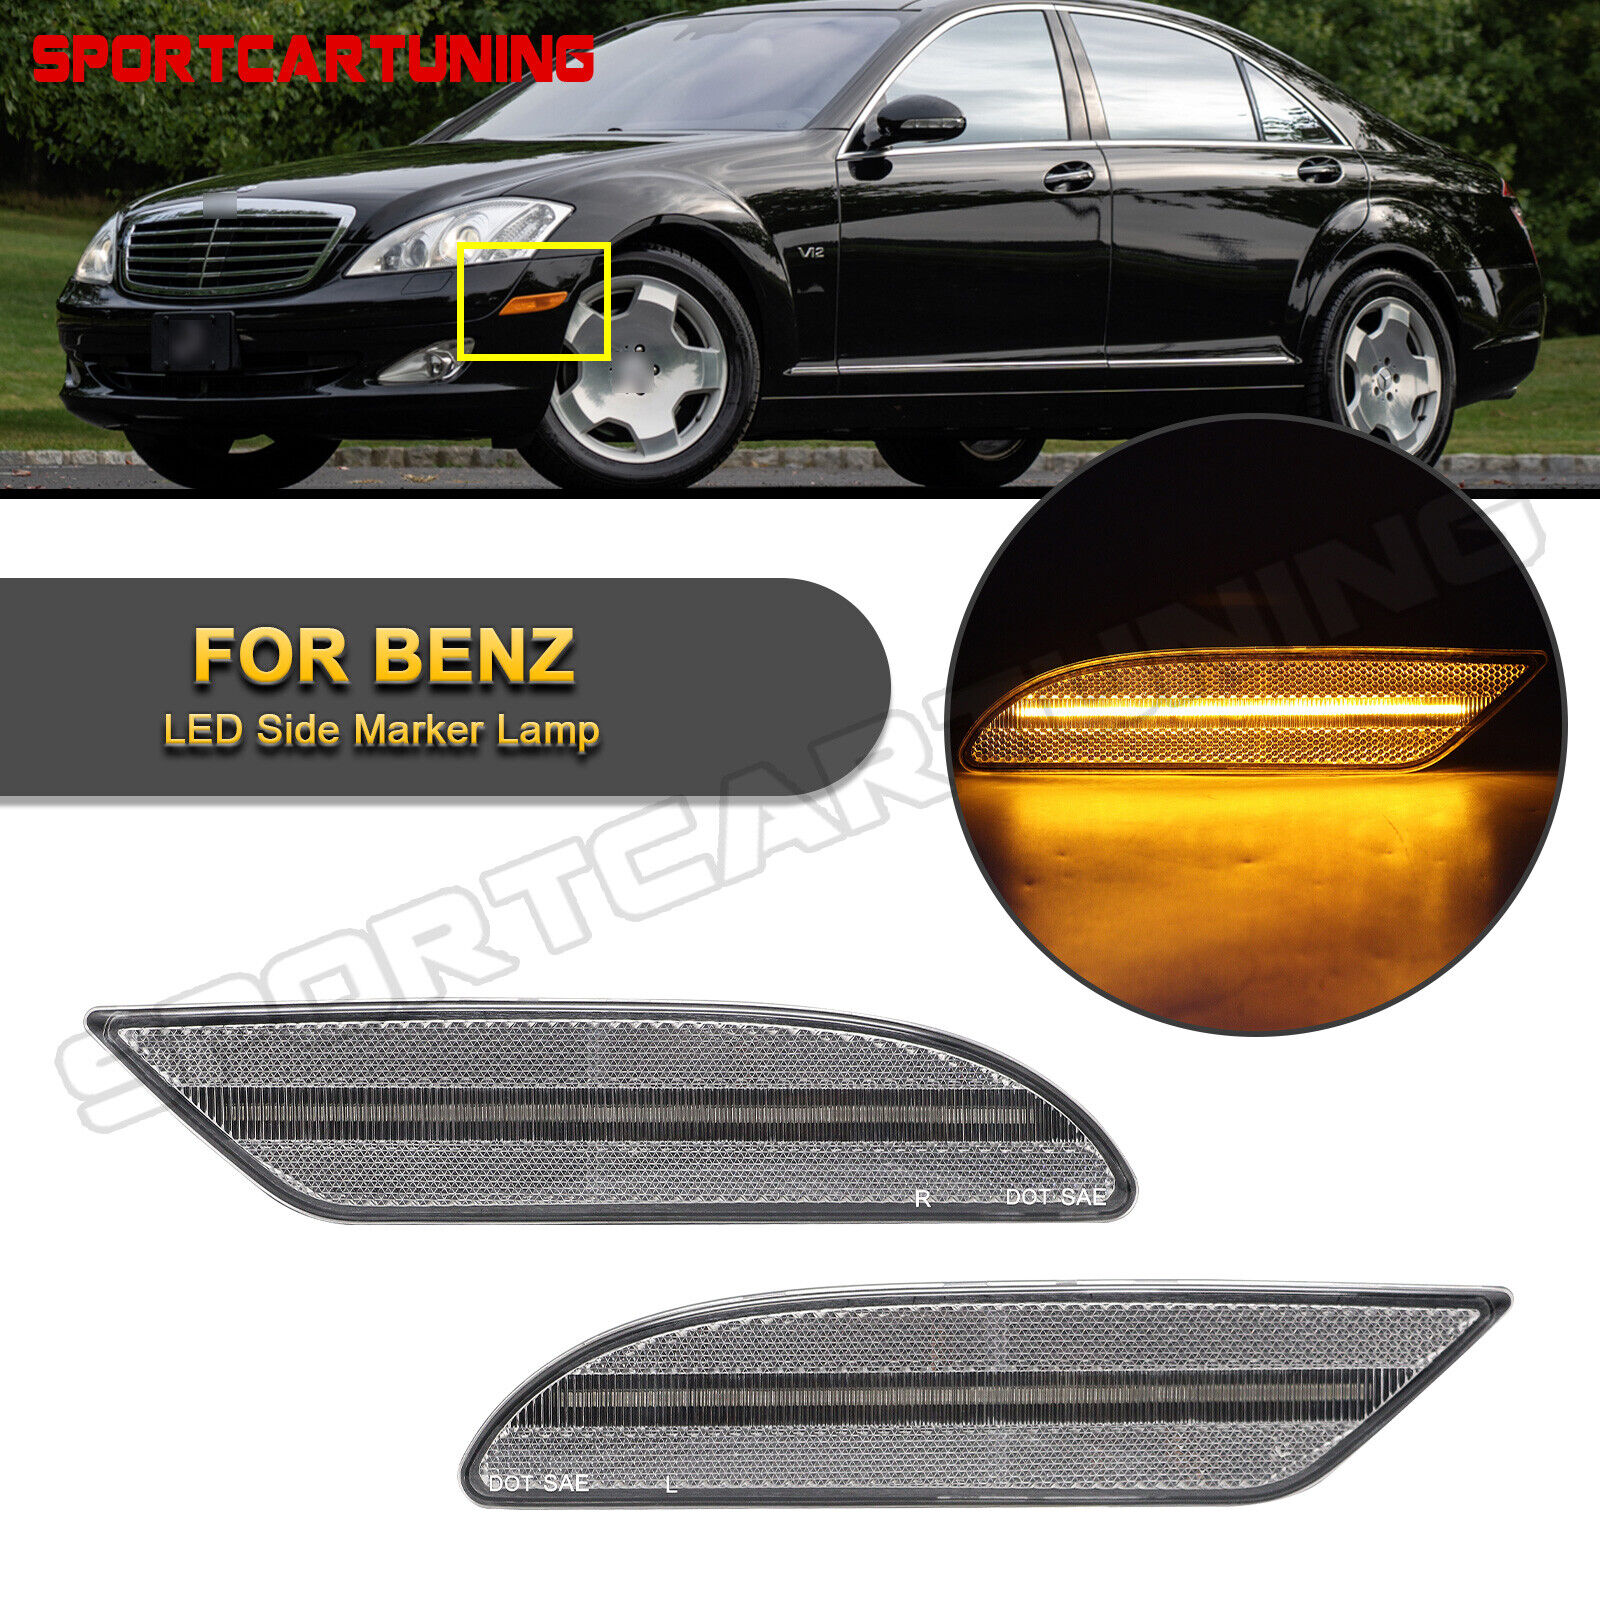 2x LED Front Bumper Side Marker Light For 2007-2009 Mercedes Benz W221 S550 S600